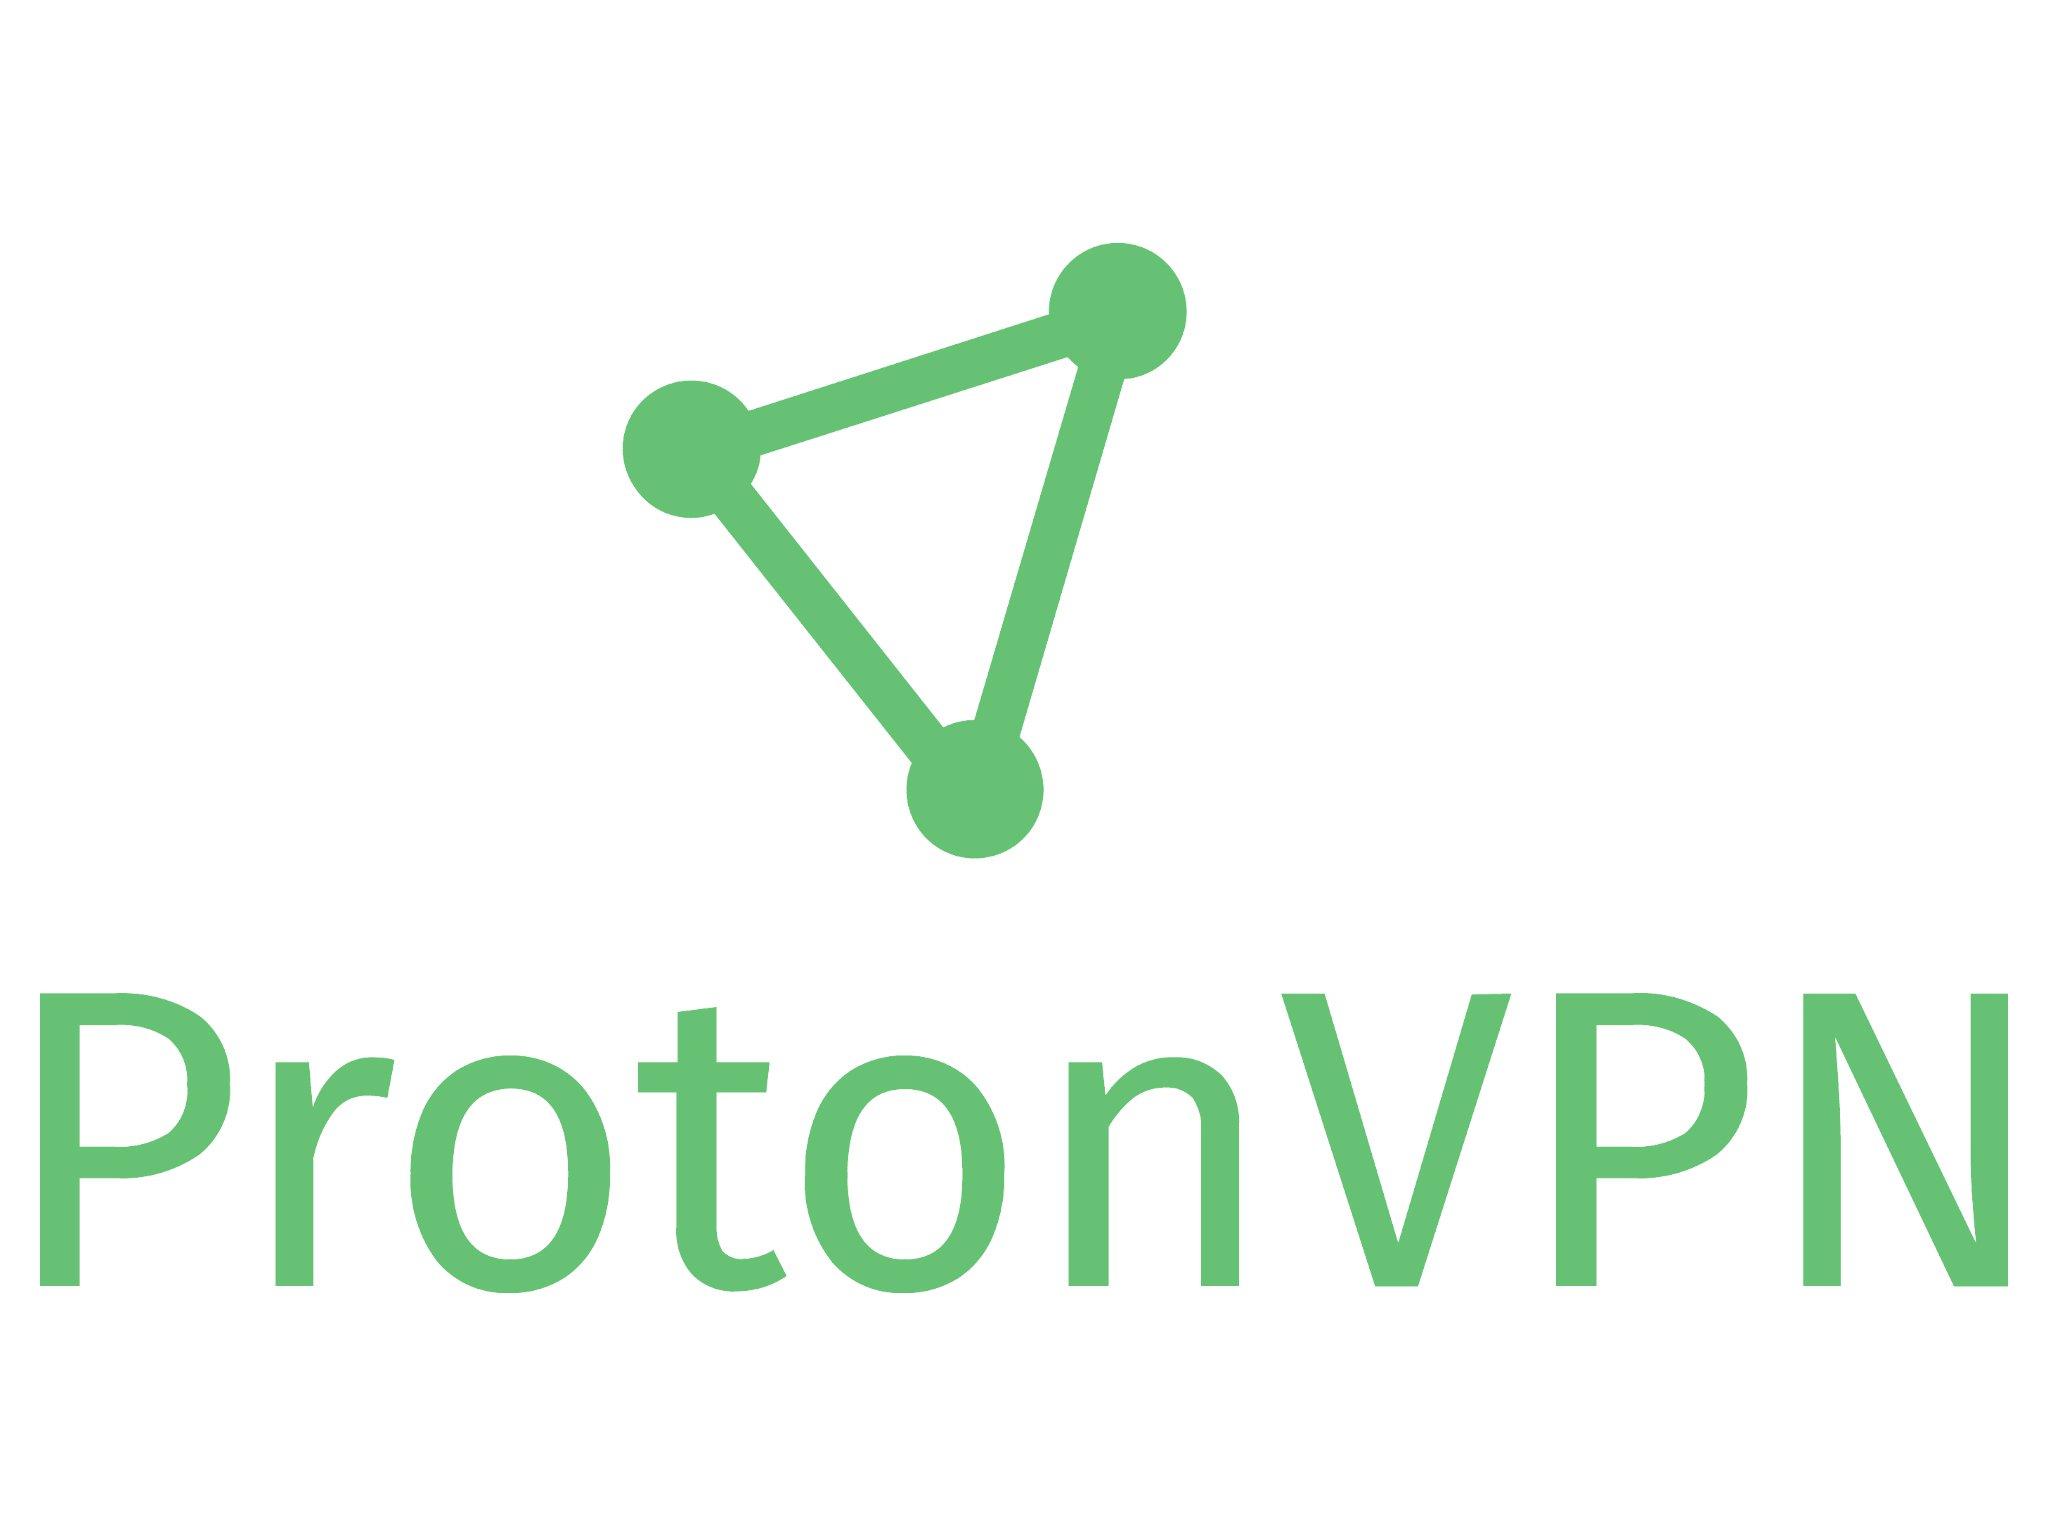 Protonvpn Logo